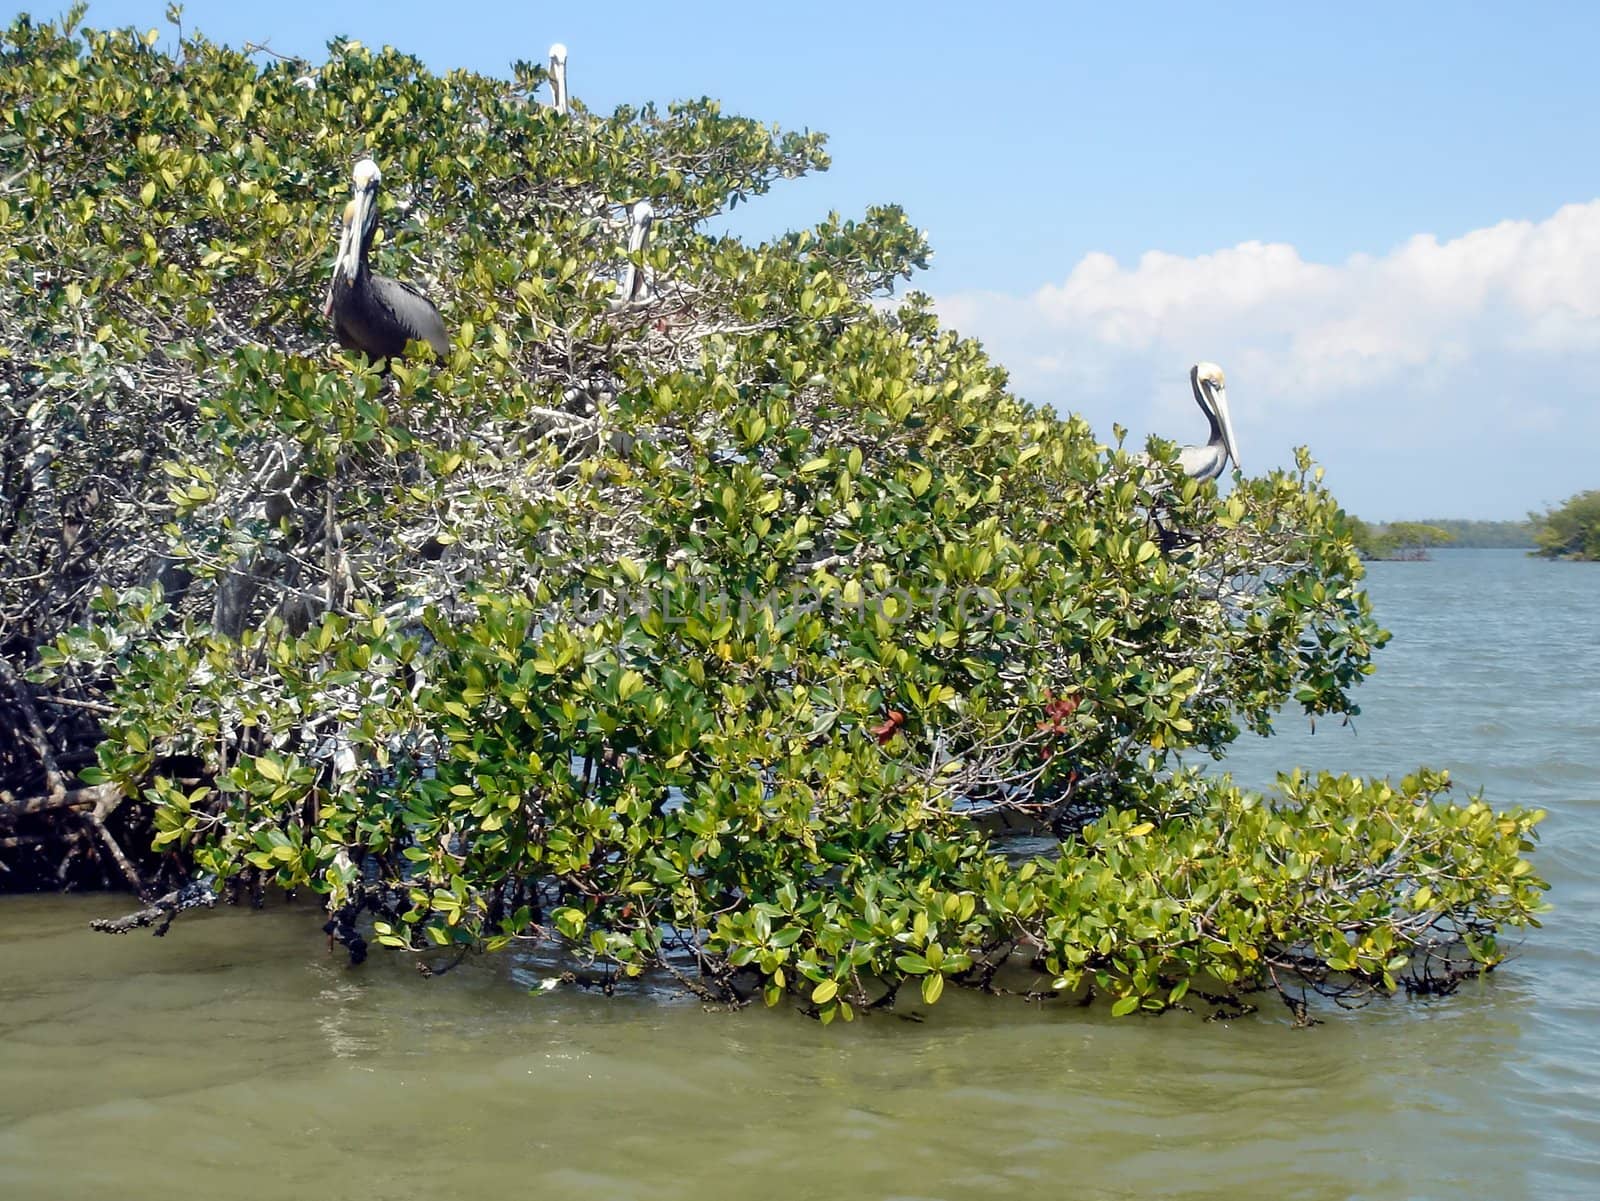 Pelicans on mangrove tree by Elenaphotos21